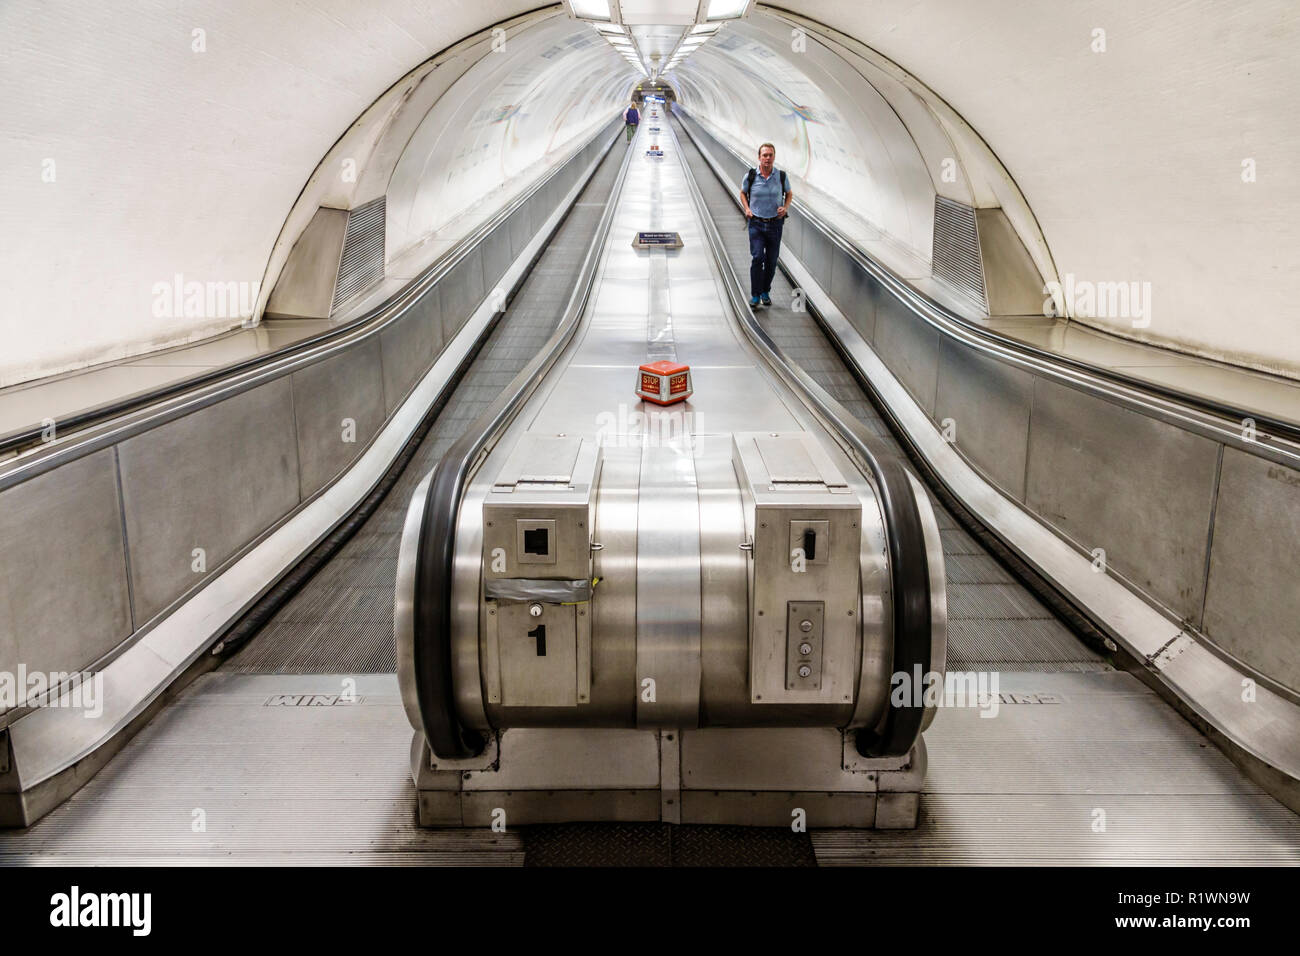 City of London England,UK Bank Underground Station train Tube,Waterloo & City Line,tube subway travelator,inclined moving walkway,ascending,man men ma Stock Photo